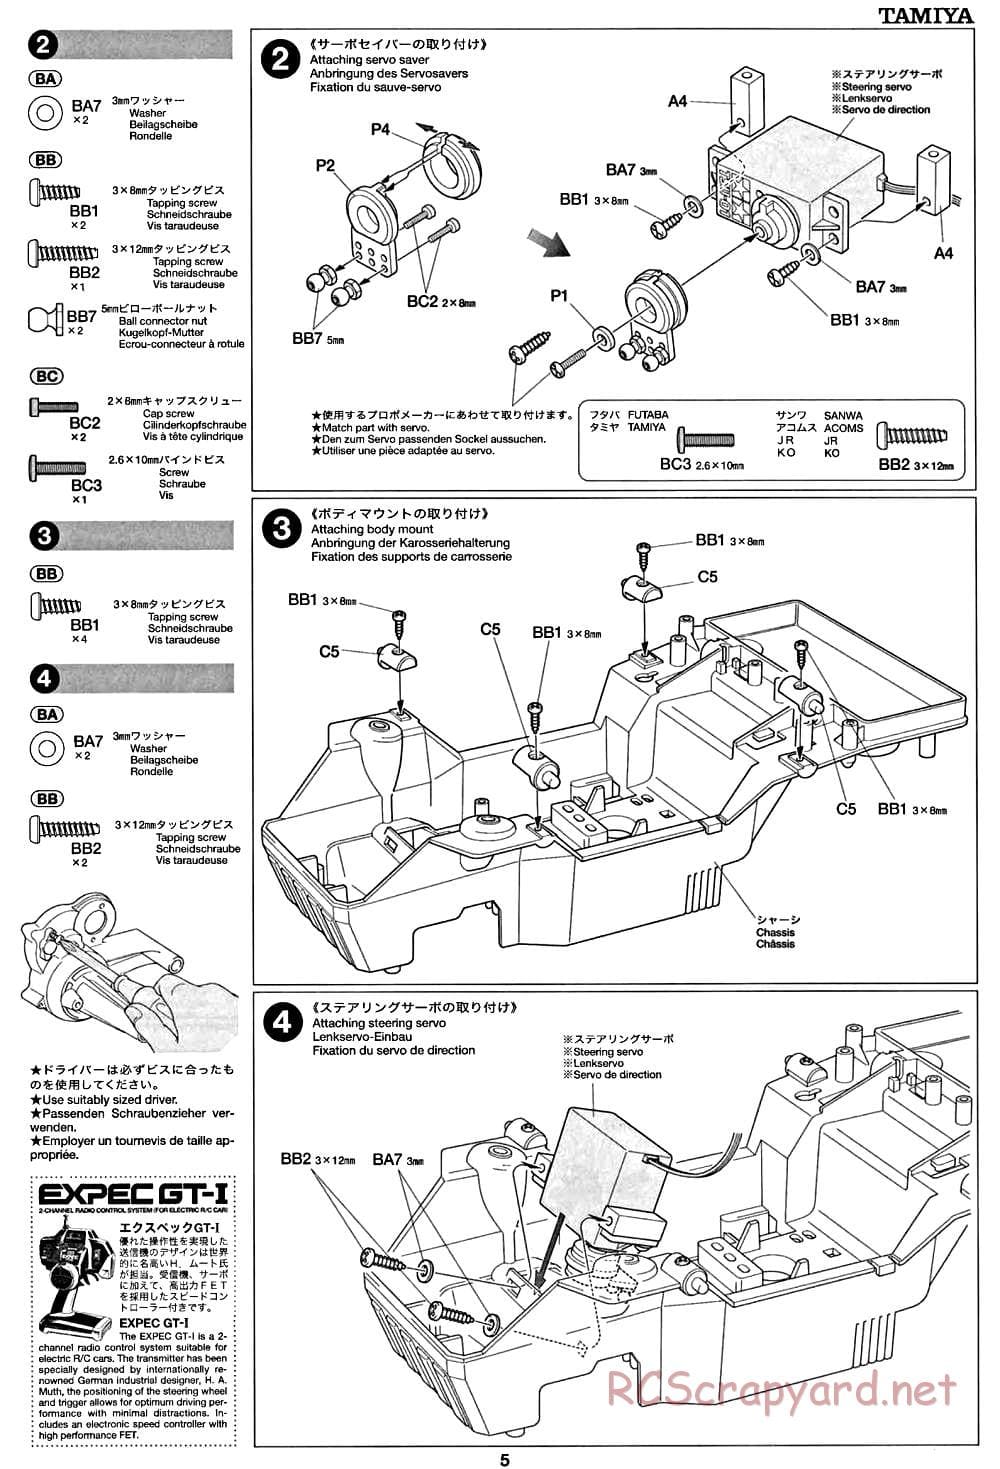 Tamiya - CW-01 Chassis - Manual - Page 5